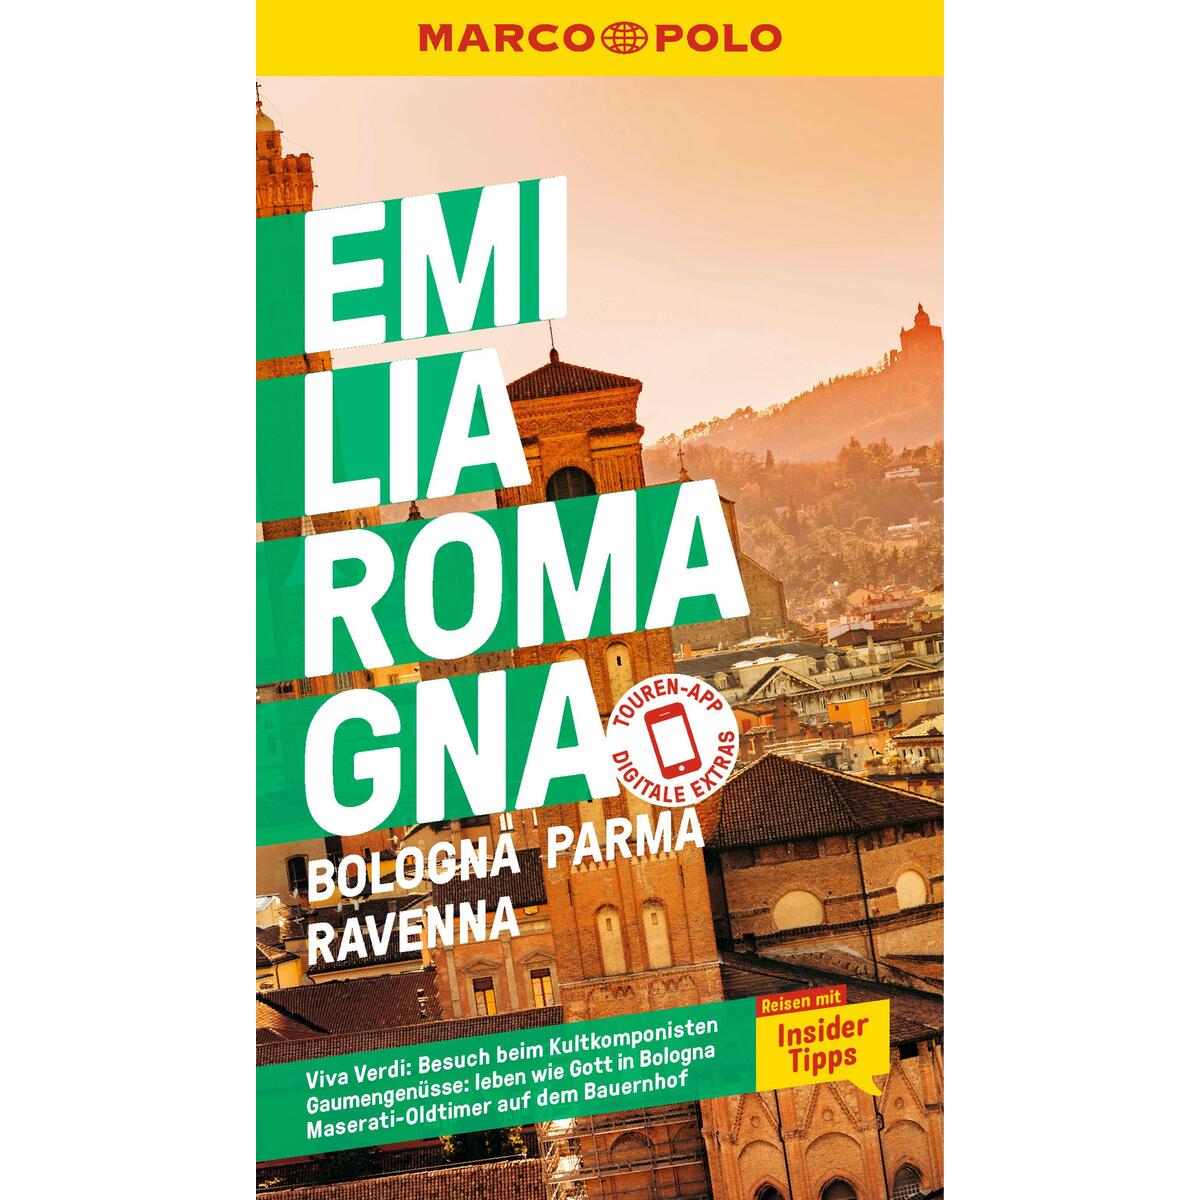 MARCO POLO Reiseführer Emilia-Romagna, Bologna, Parma, Ravenna von Mairdumont